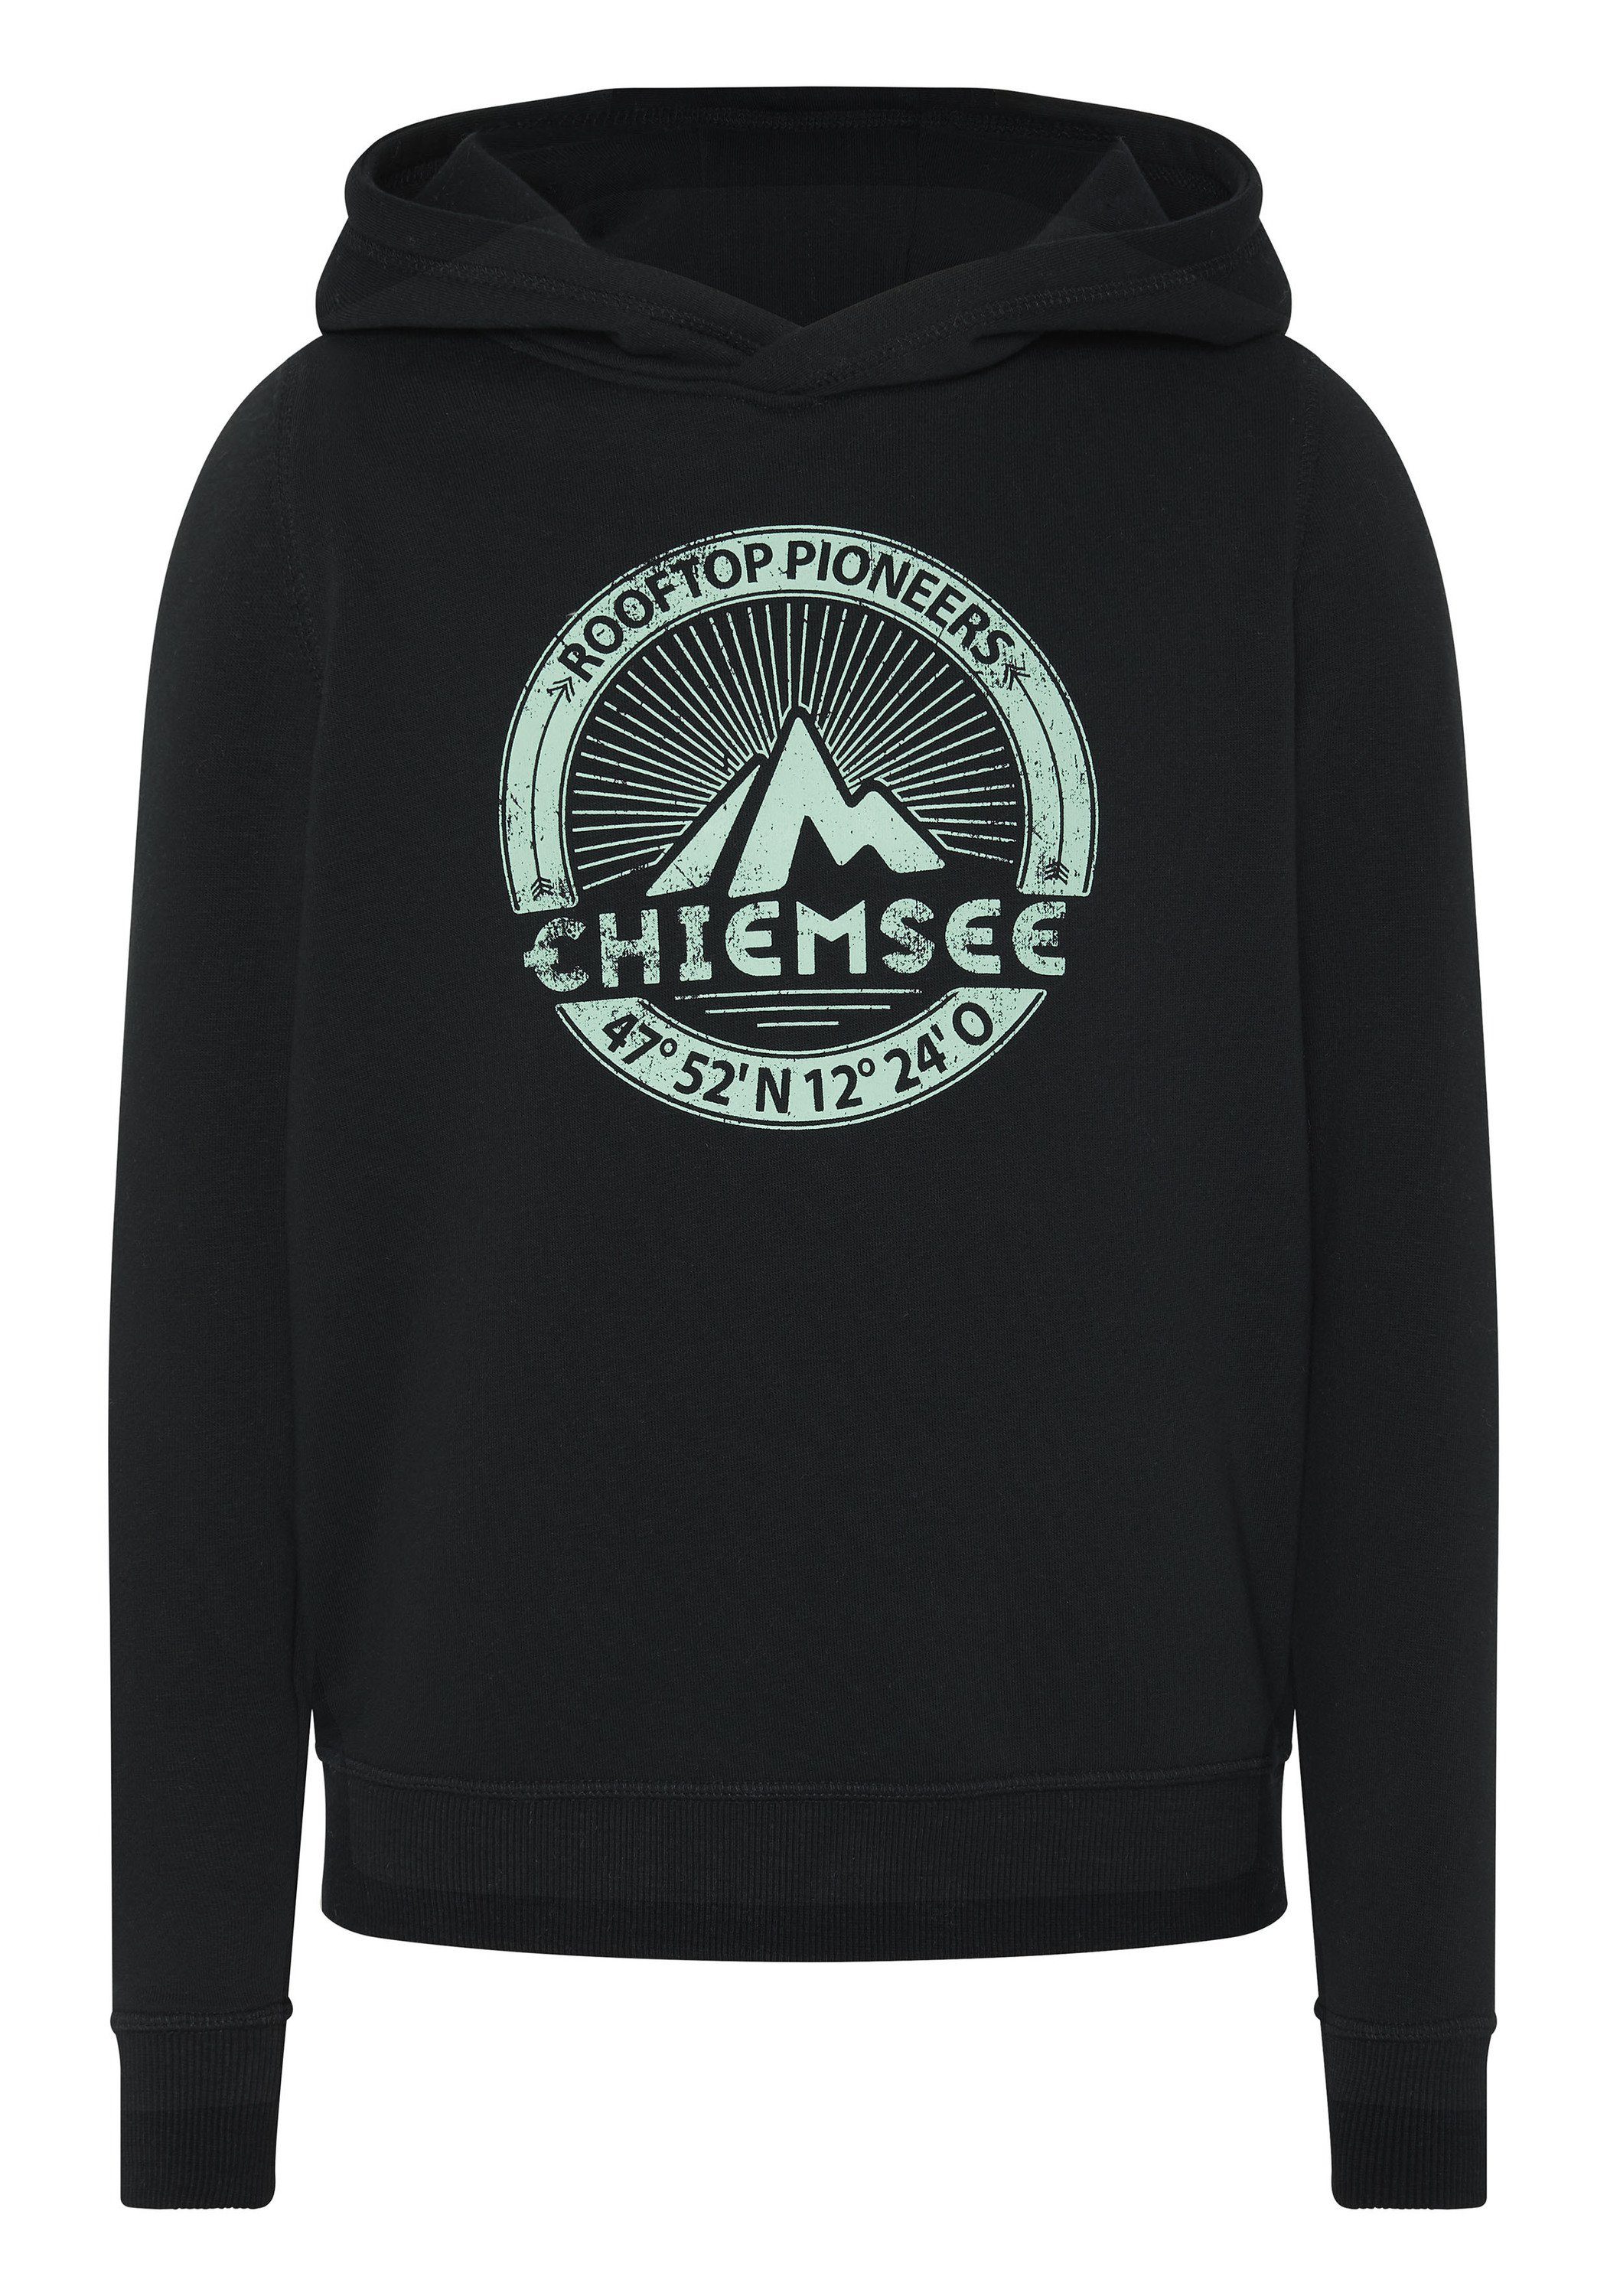 Chiemsee Kapuzensweatshirt Hoodie mit Label-Mountain-Print 1 19-3911 Black Beauty